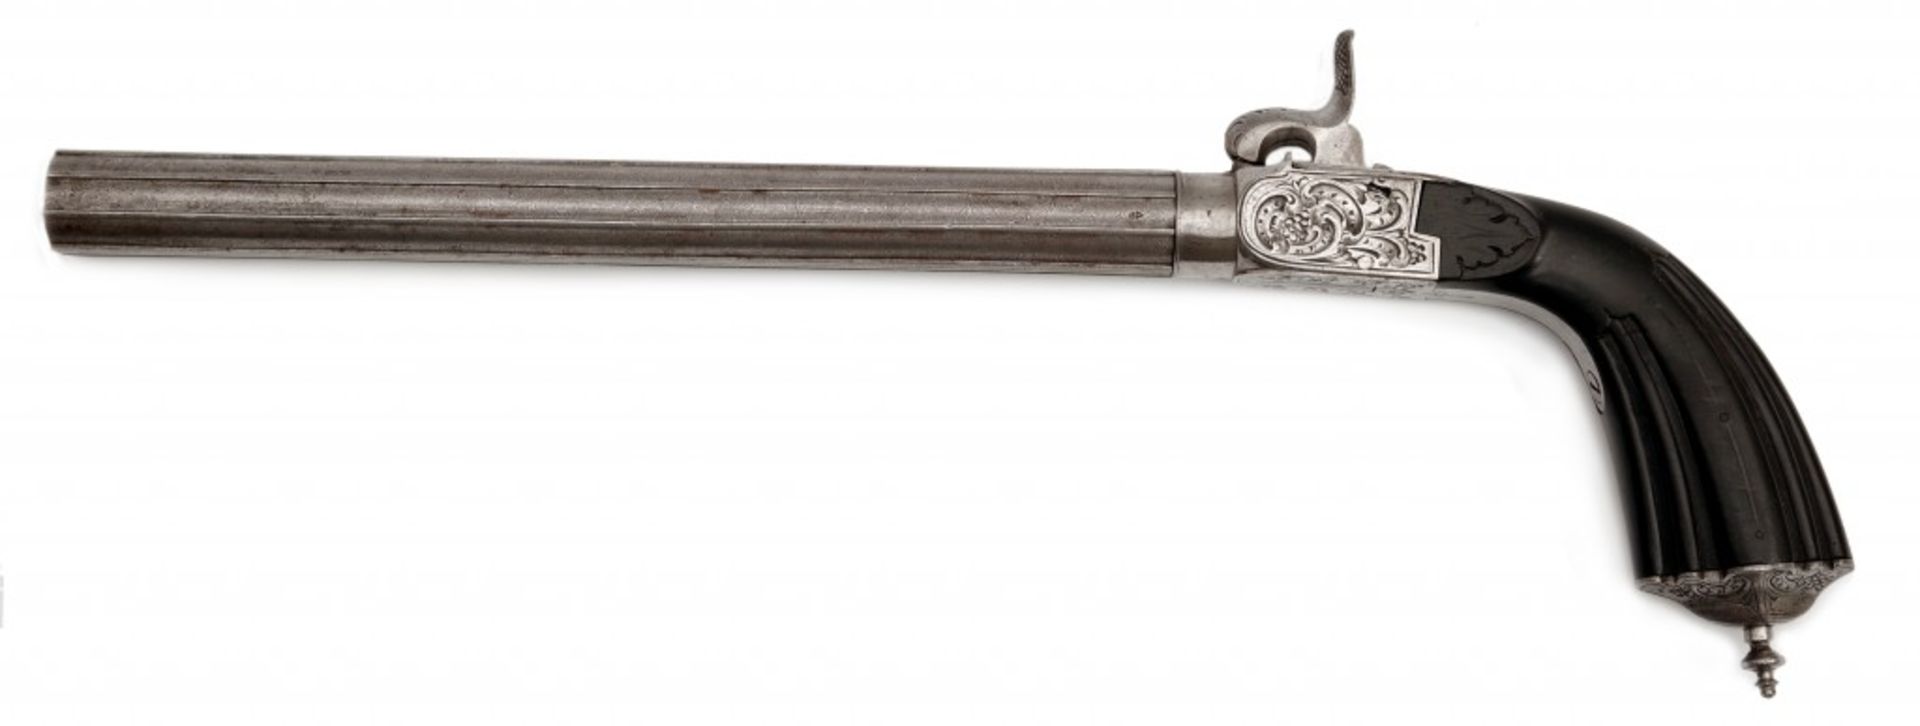 A Percussion Cap Pocket Pistol with Long Barrel - Image 3 of 14